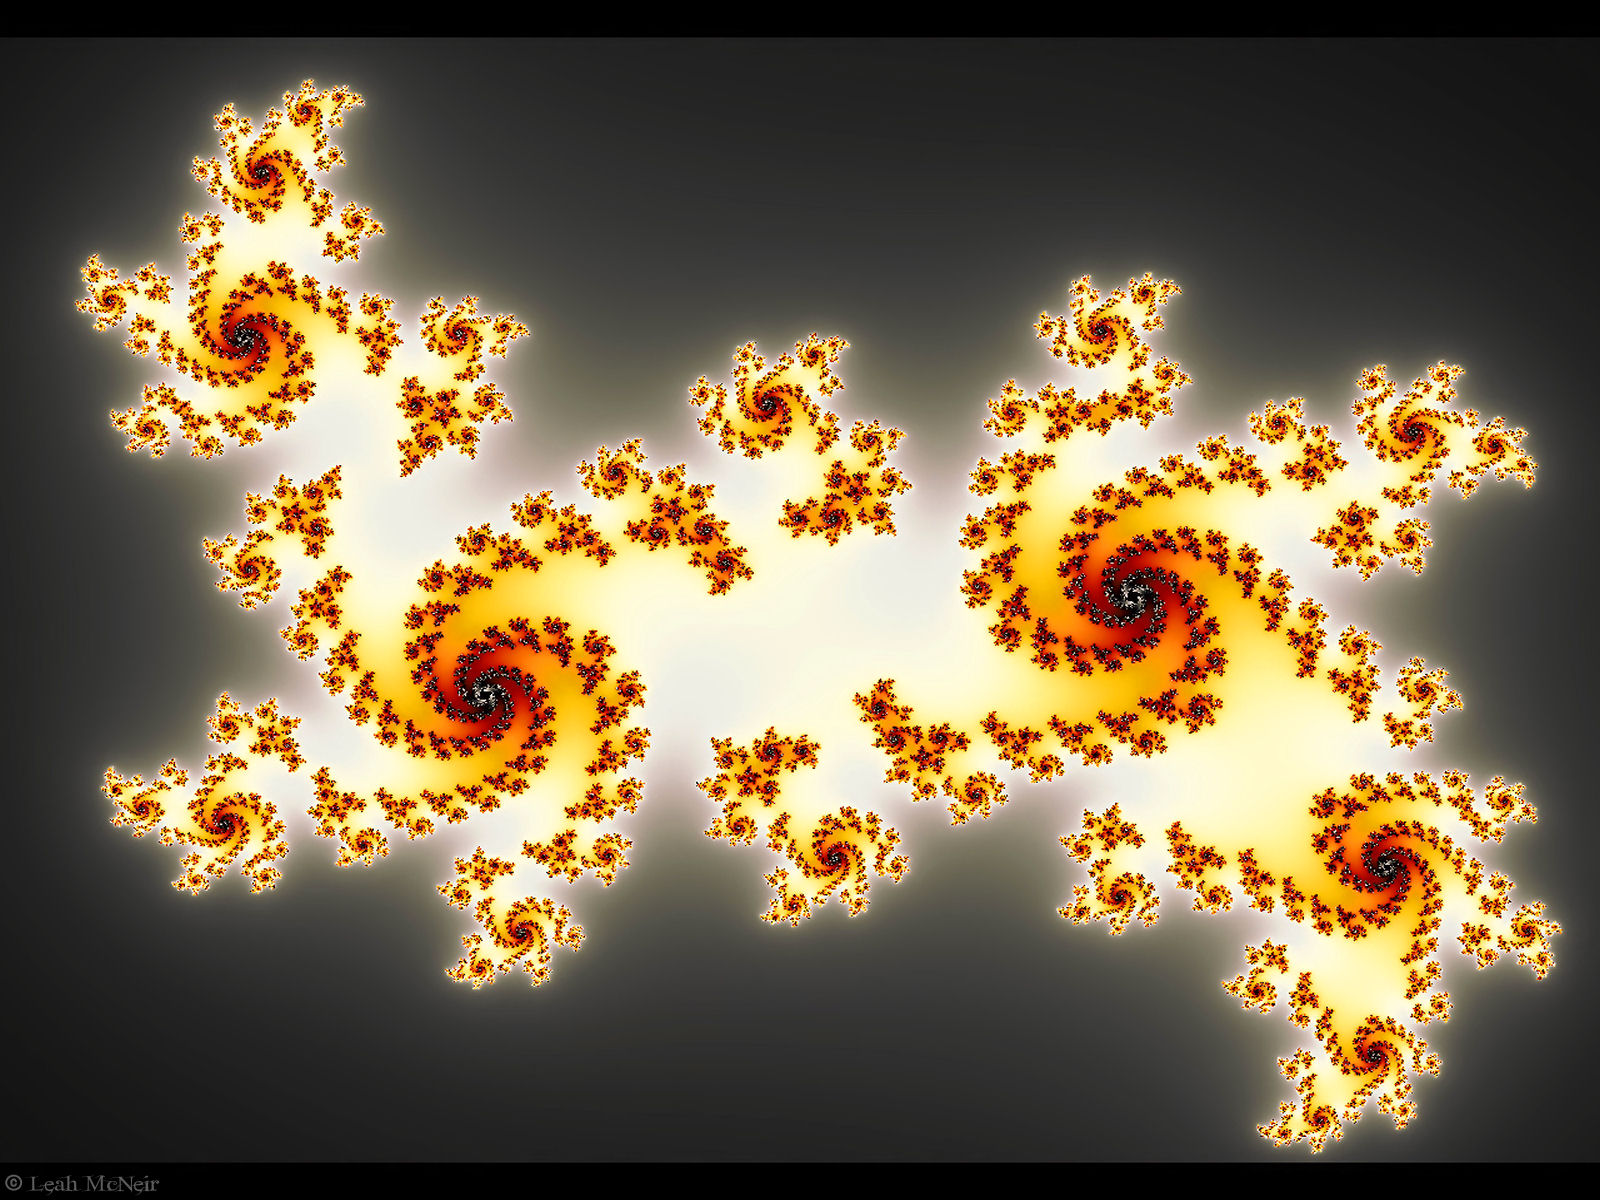 http://celestialdreams.files.wordpress.com/2009/03/mandelbrot-dragon-yellow-lm-fractal-wallpaper-art.jpg